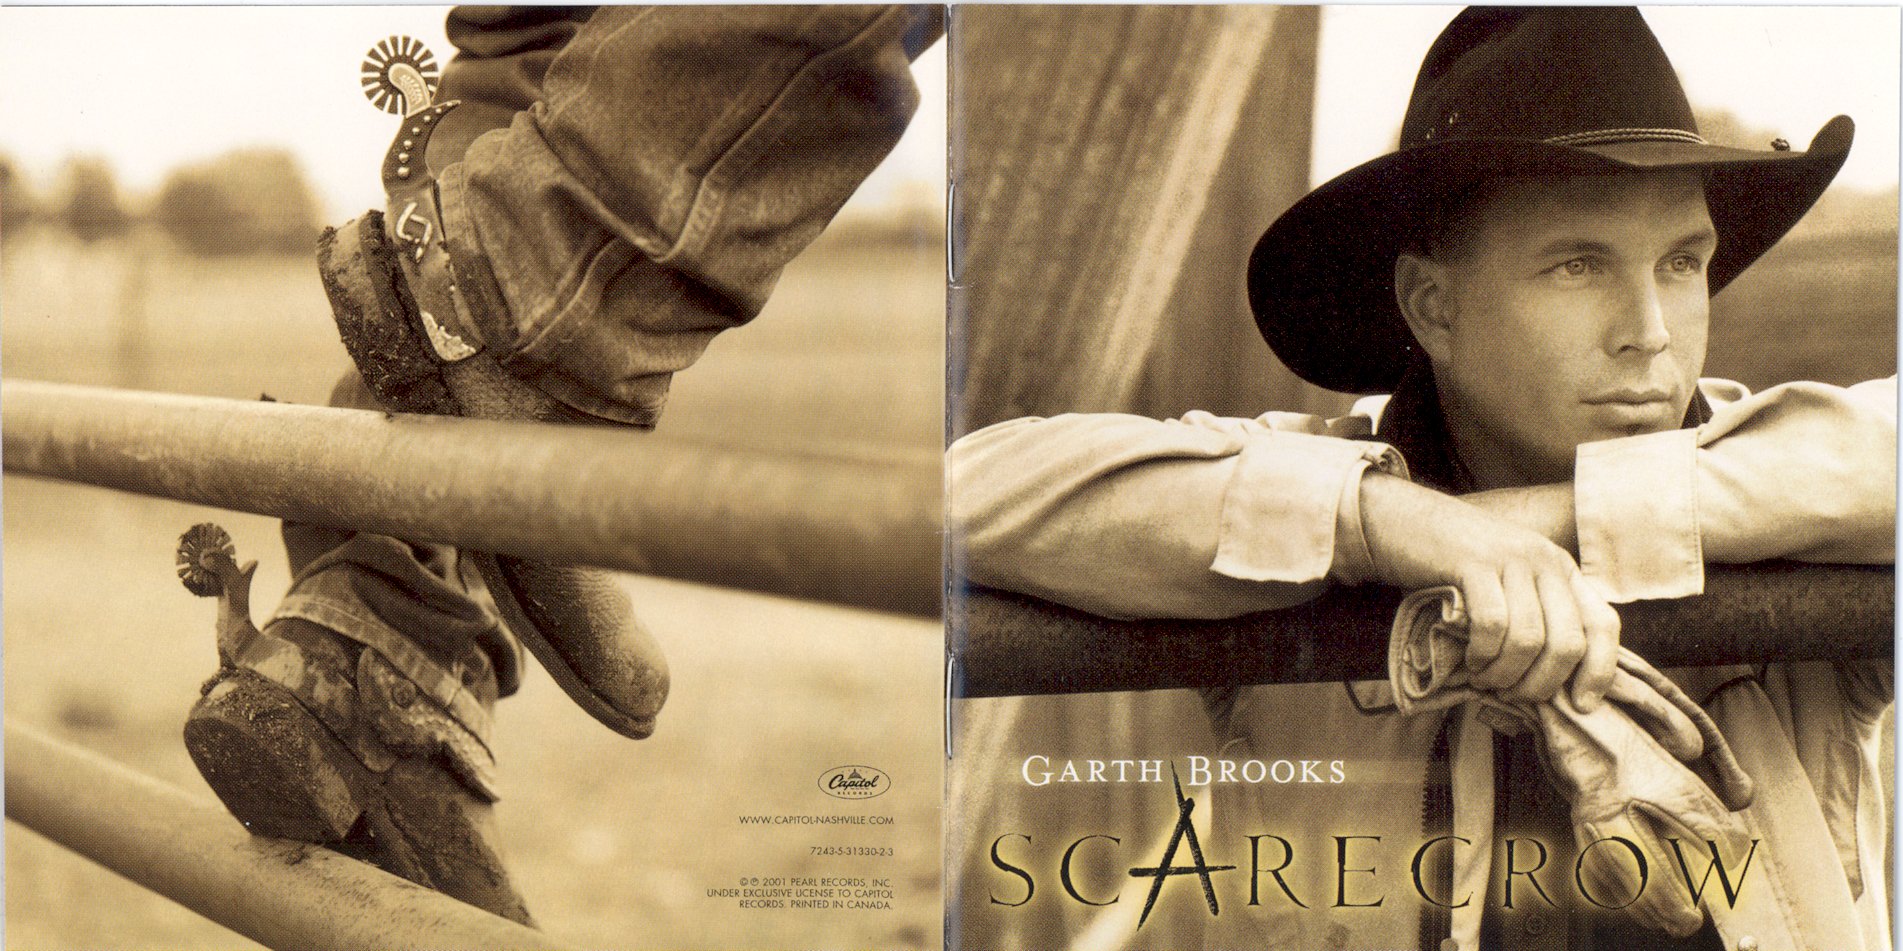 Garth Brooks - Scarecrow - front.